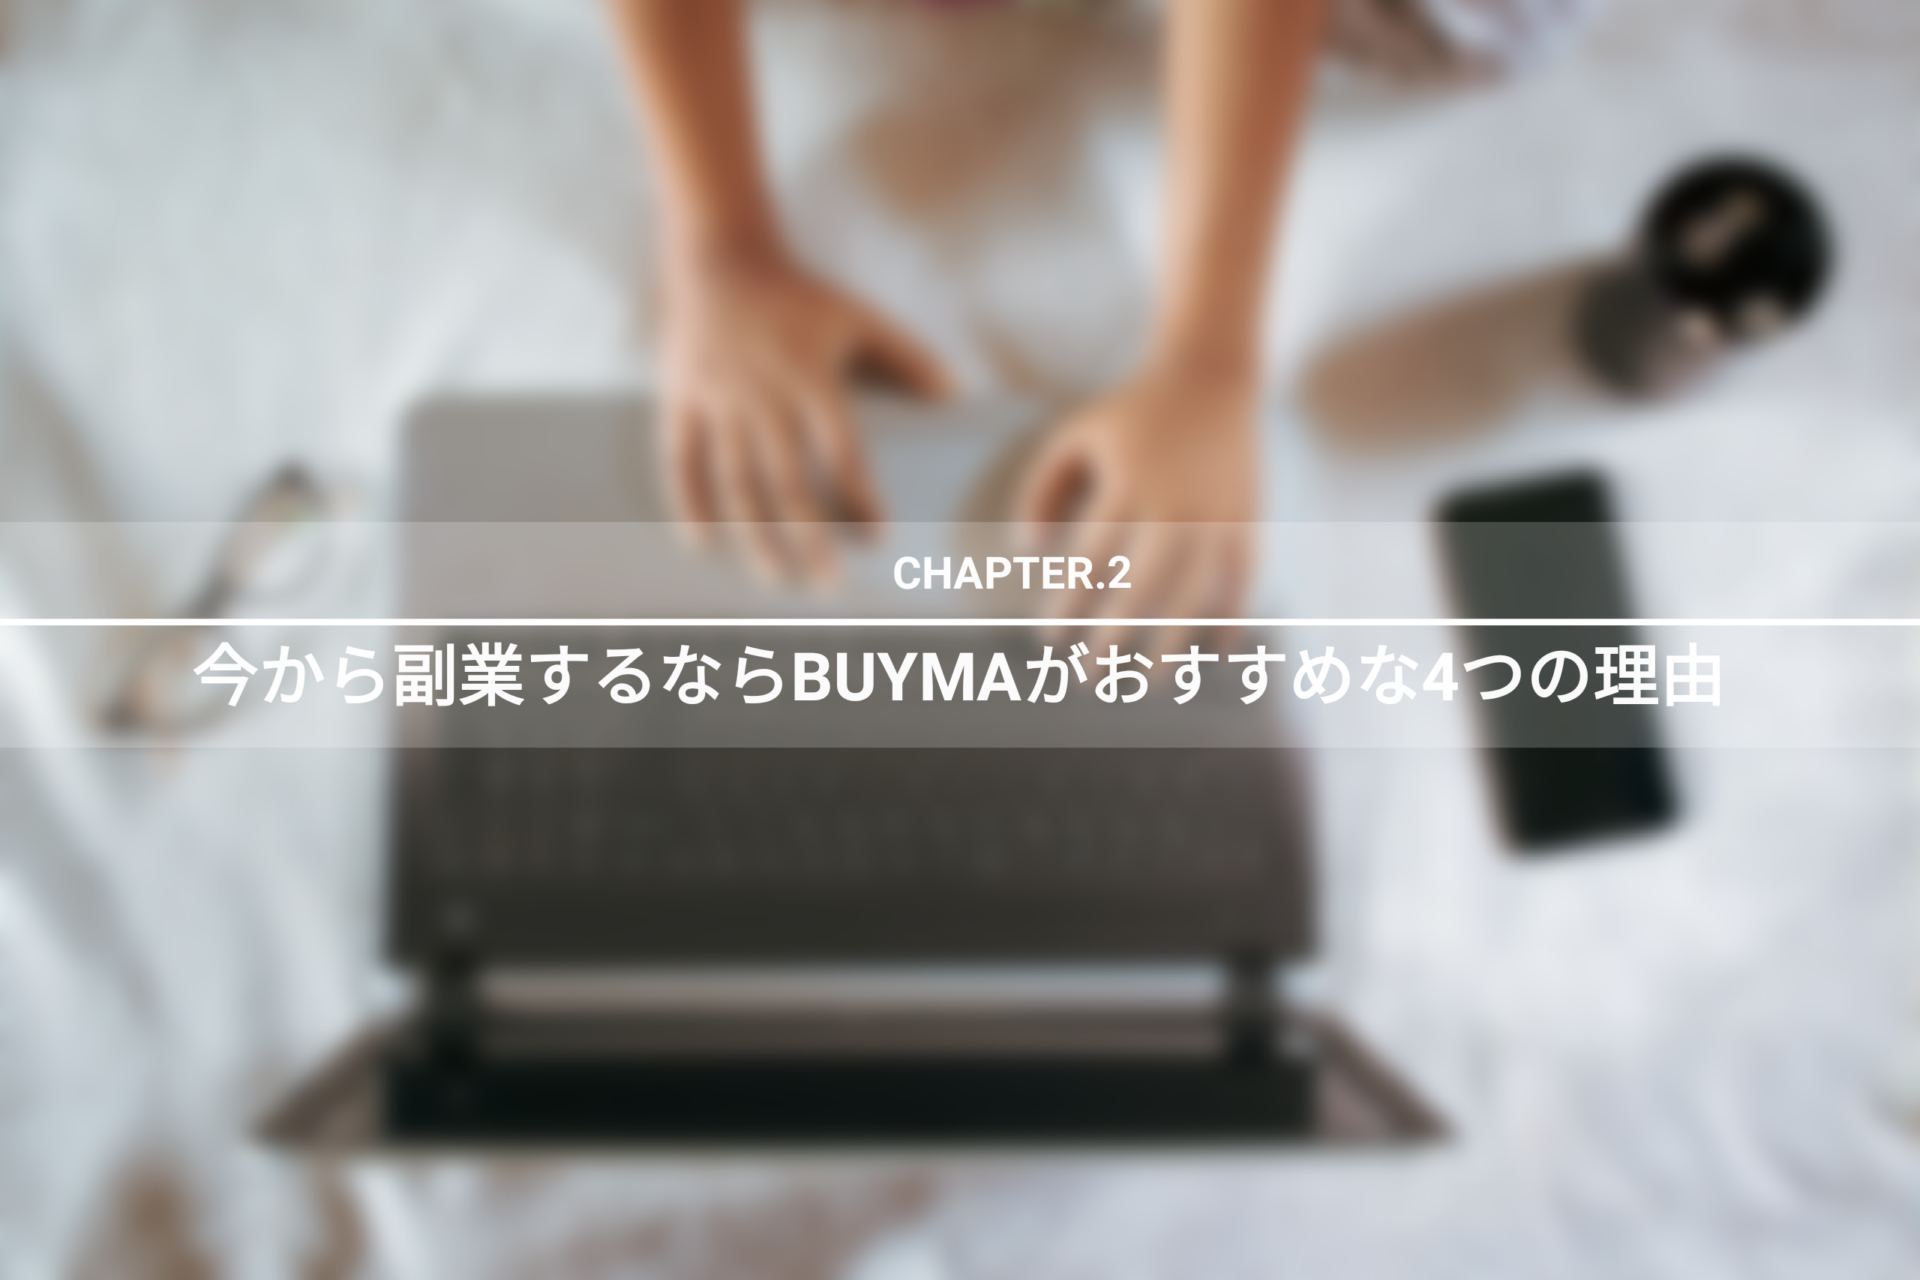 Buyma バイマ とは コロナ禍でもしっかり稼げる最強の副業 Buyma バイマ の副業で月収100万以上稼ぐ為のブログ